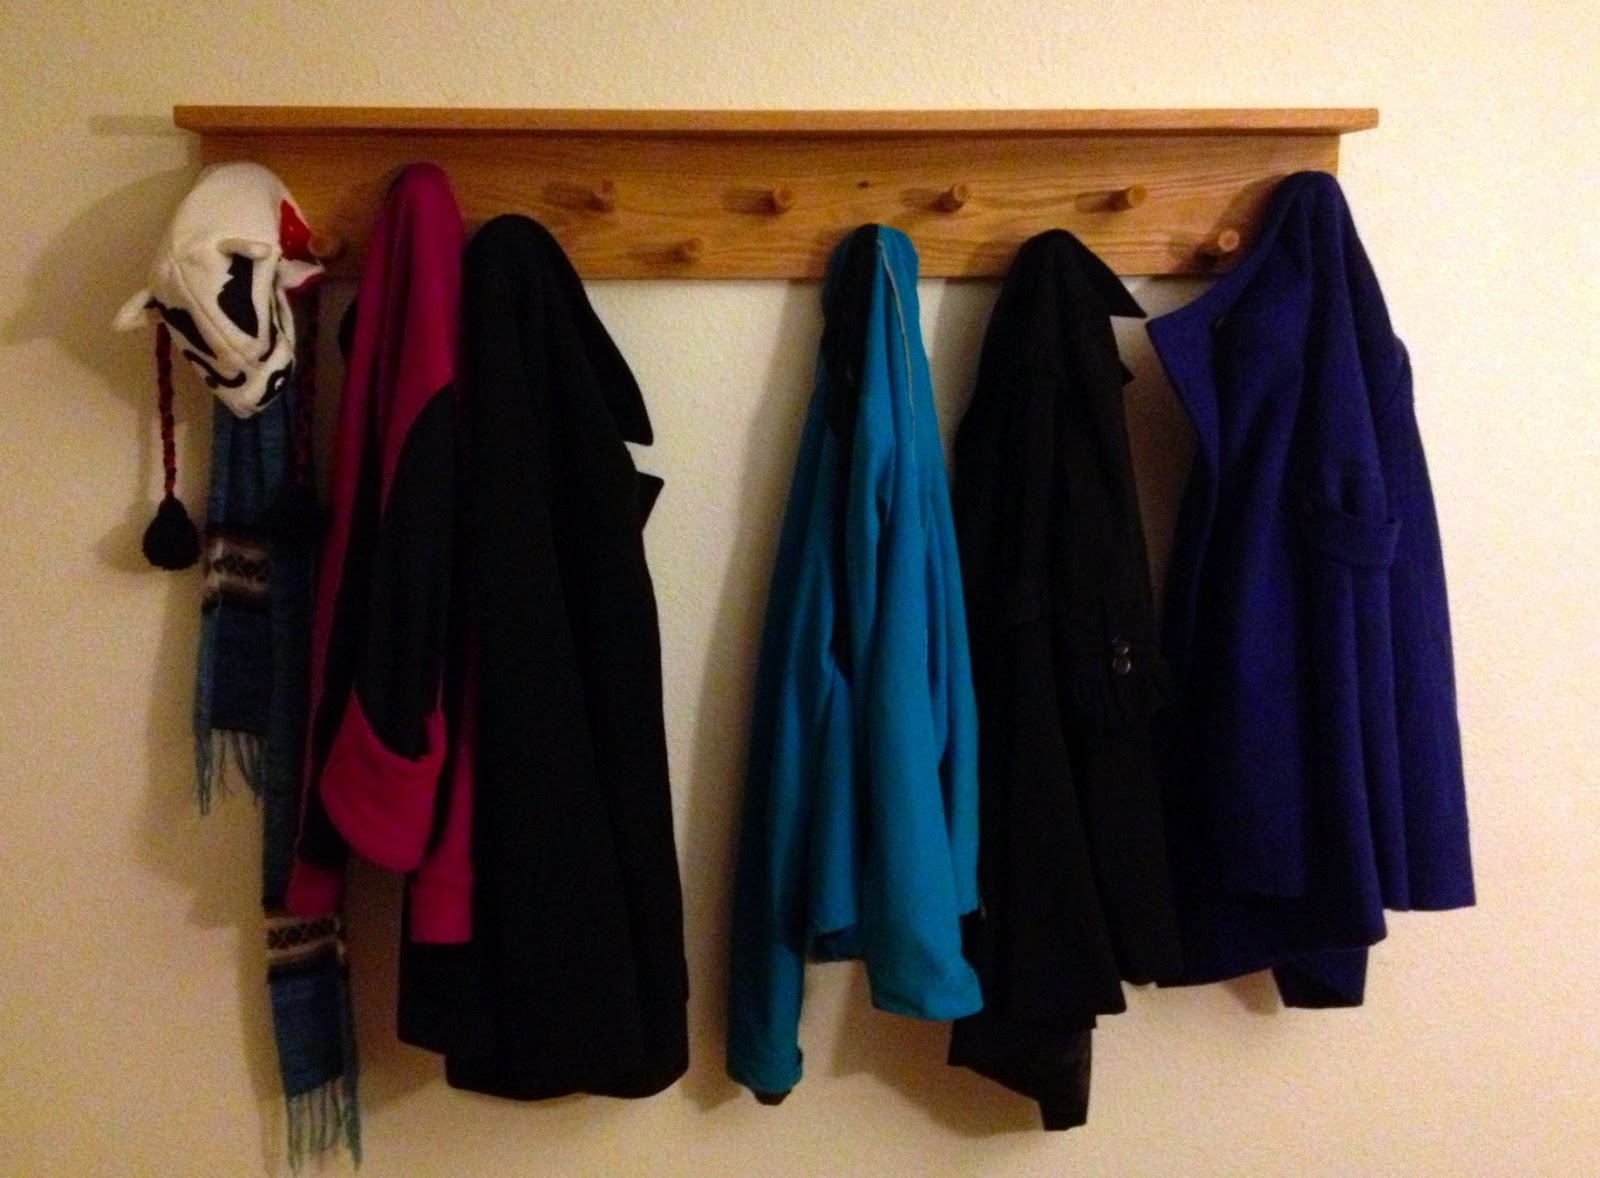 diy cheap wooden coat hanger  Diy clothes hangers, Diy clothes rack,  Wooden coat hangers